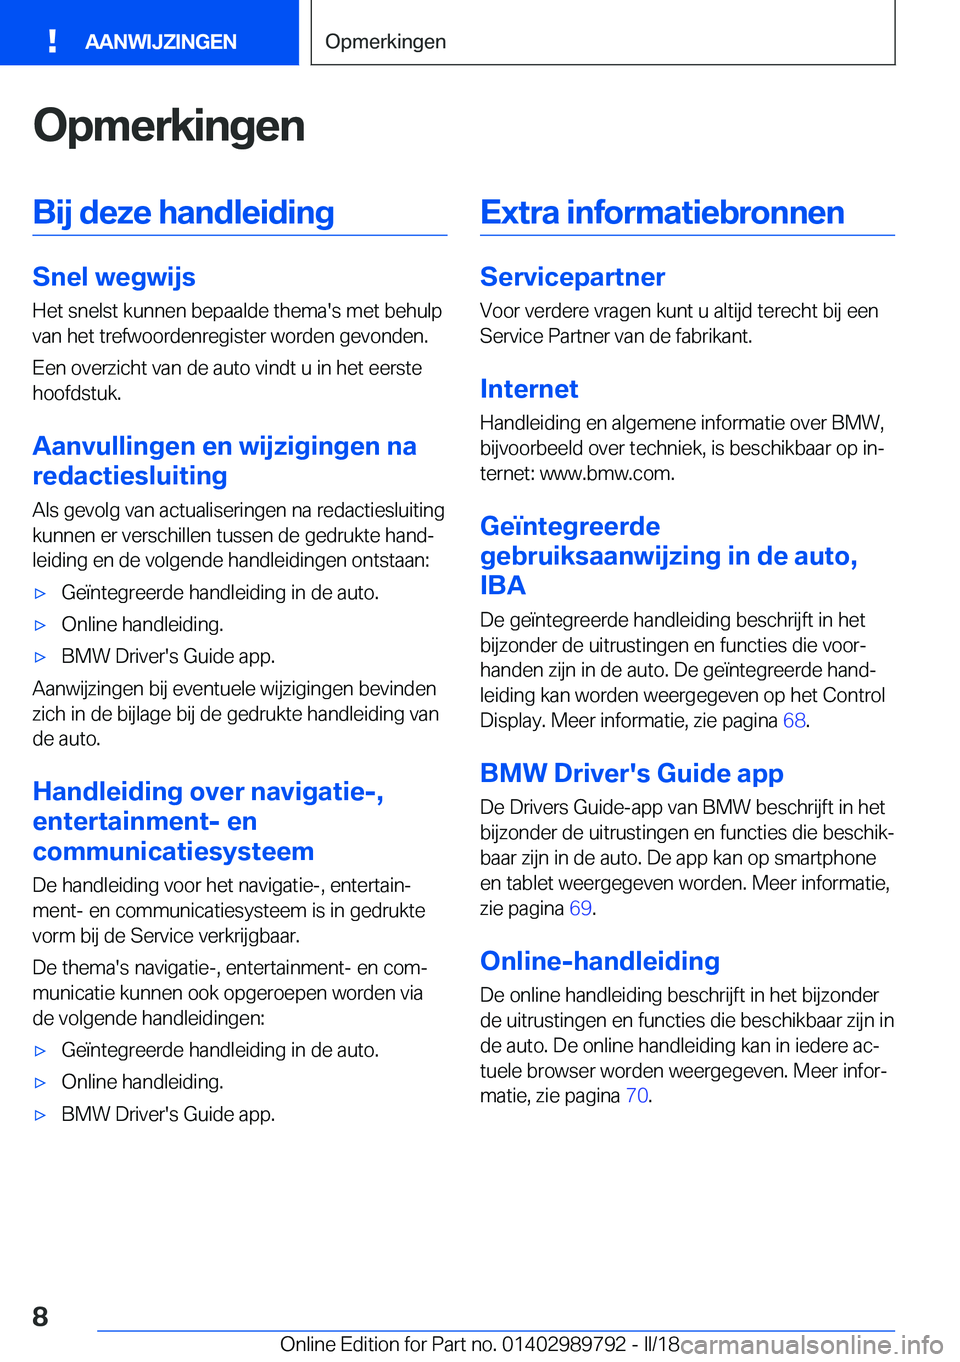 BMW M5 2018  Instructieboekjes (in Dutch) �O�p�m�e�r�k�i�n�g�e�n�B�i�j��d�e�z�e��h�a�n�d�l�e�i�d�i�n�g
�S�n�e�l��w�e�g�w�i�j�s
�H�e�t� �s�n�e�l�s�t� �k�u�n�n�e�n� �b�e�p�a�a�l�d�e� �t�h�e�m�a�'�s� �m�e�t� �b�e�h�u�l�p
�v�a�n� �h�e�t� �